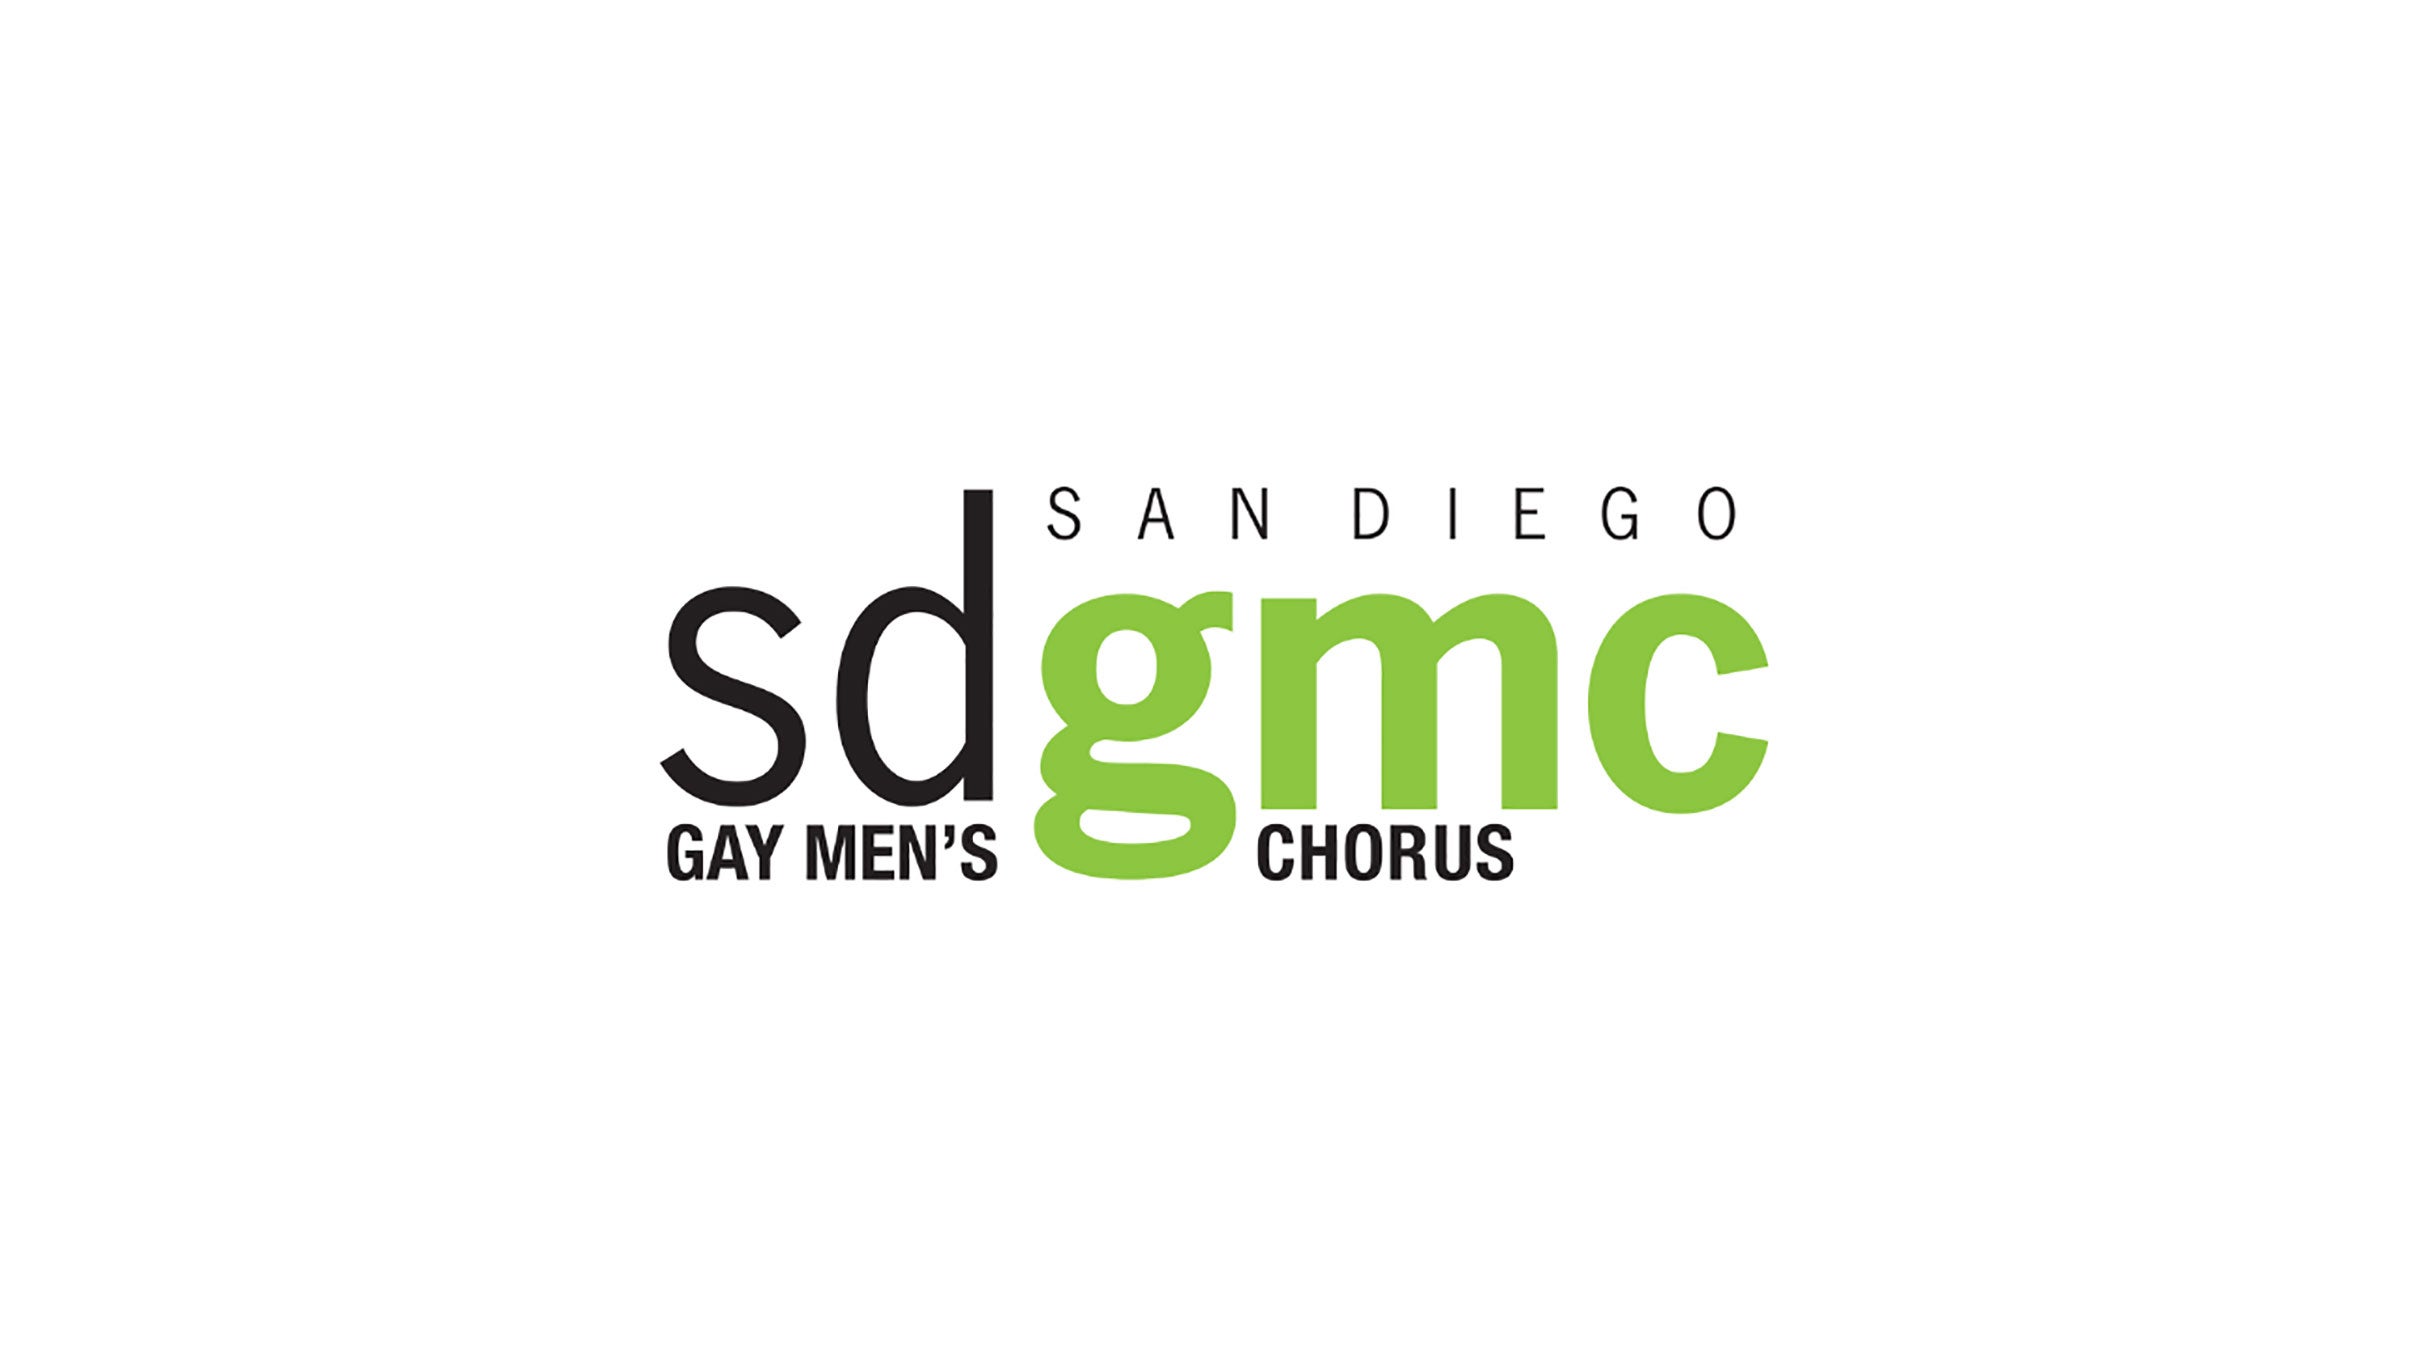 San Diego Gay Men's Chorus proudly presents FREAK OUT!